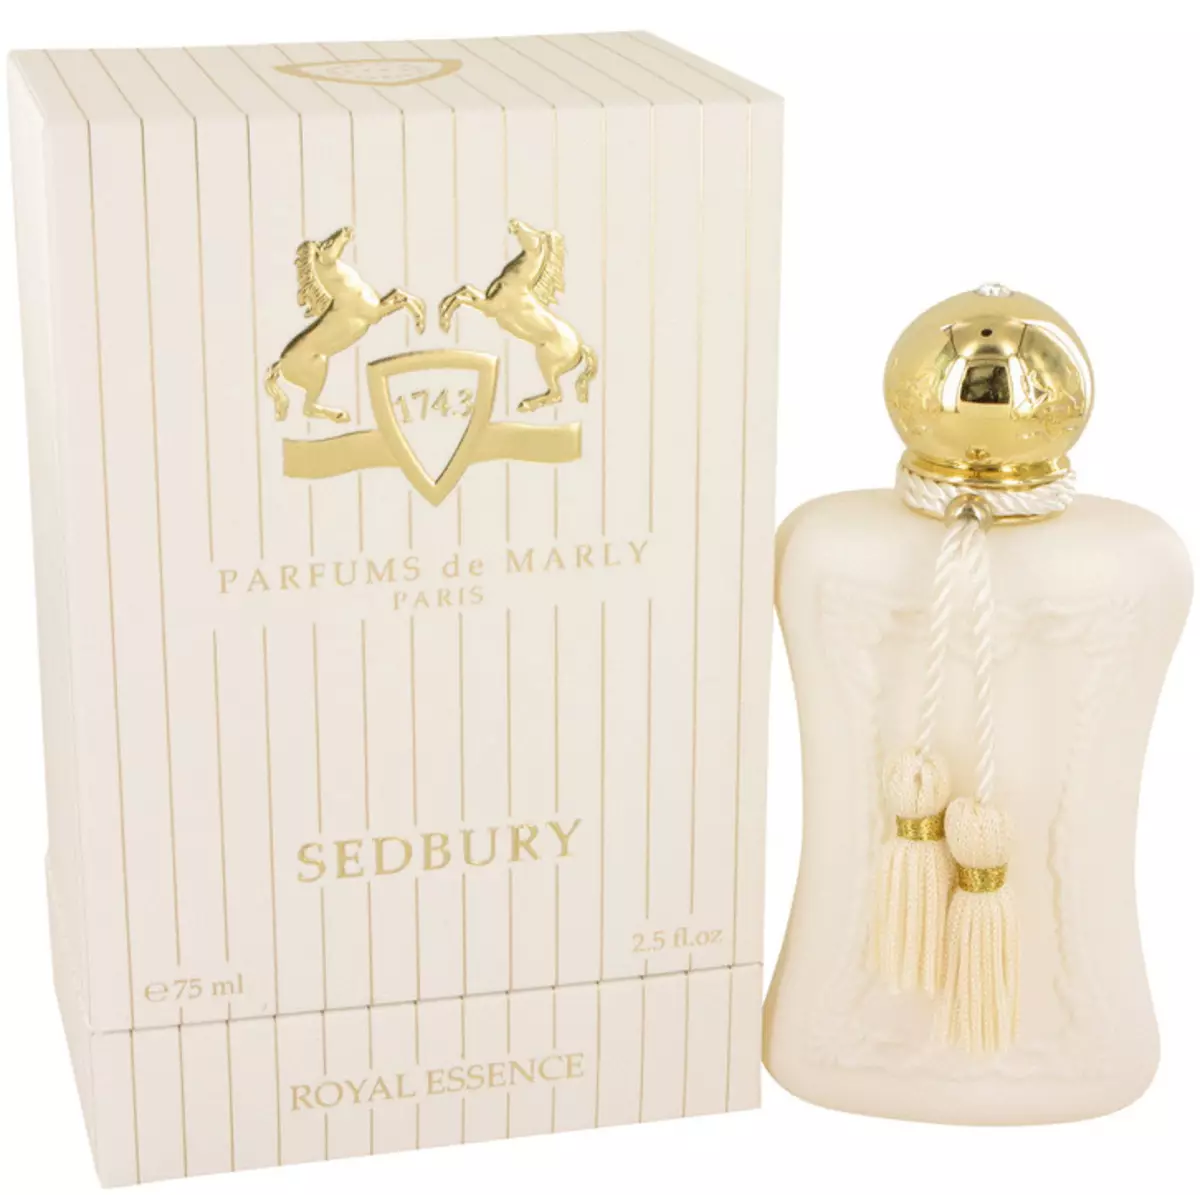 Parfums de marly perfumes: delina, మెలియర్ మరియు లేటన్, హేరోదు మరియు డార్లీ, కాస్సిలి మరియు ఇతర ఆత్మలు, ఎంపిక ప్రమాణాలు, సమీక్షలు 25169_38